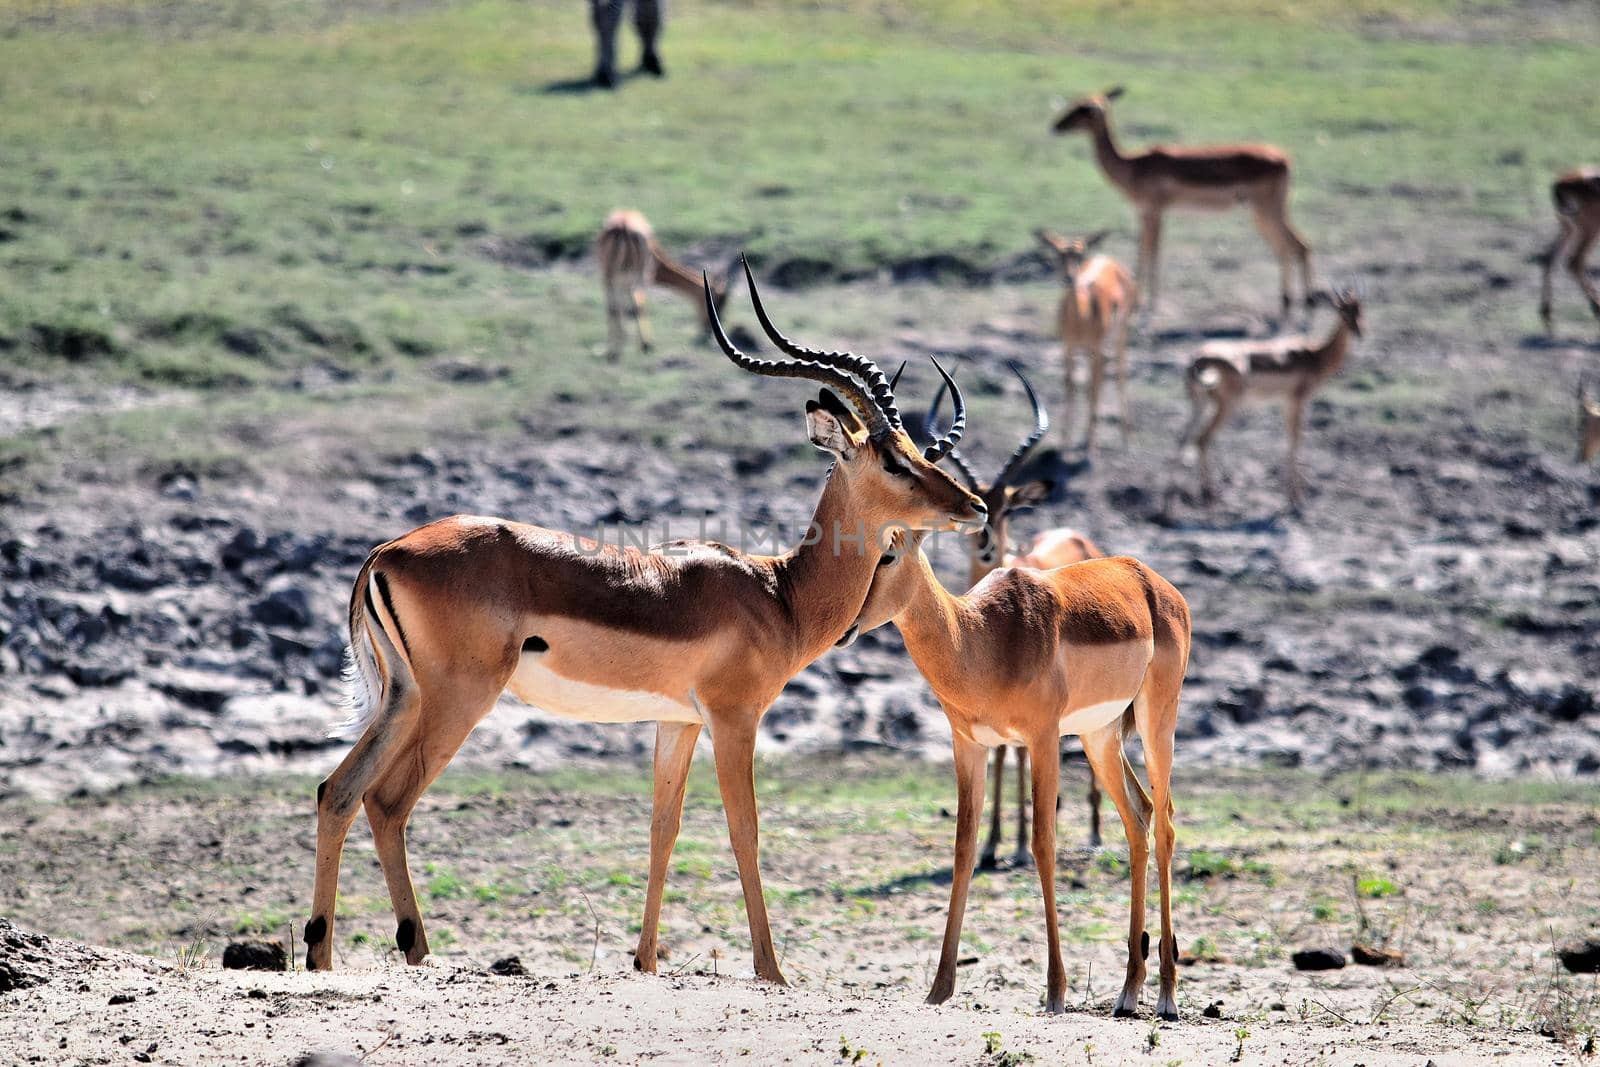 A small group of impala in Chobe National Park, Botswana